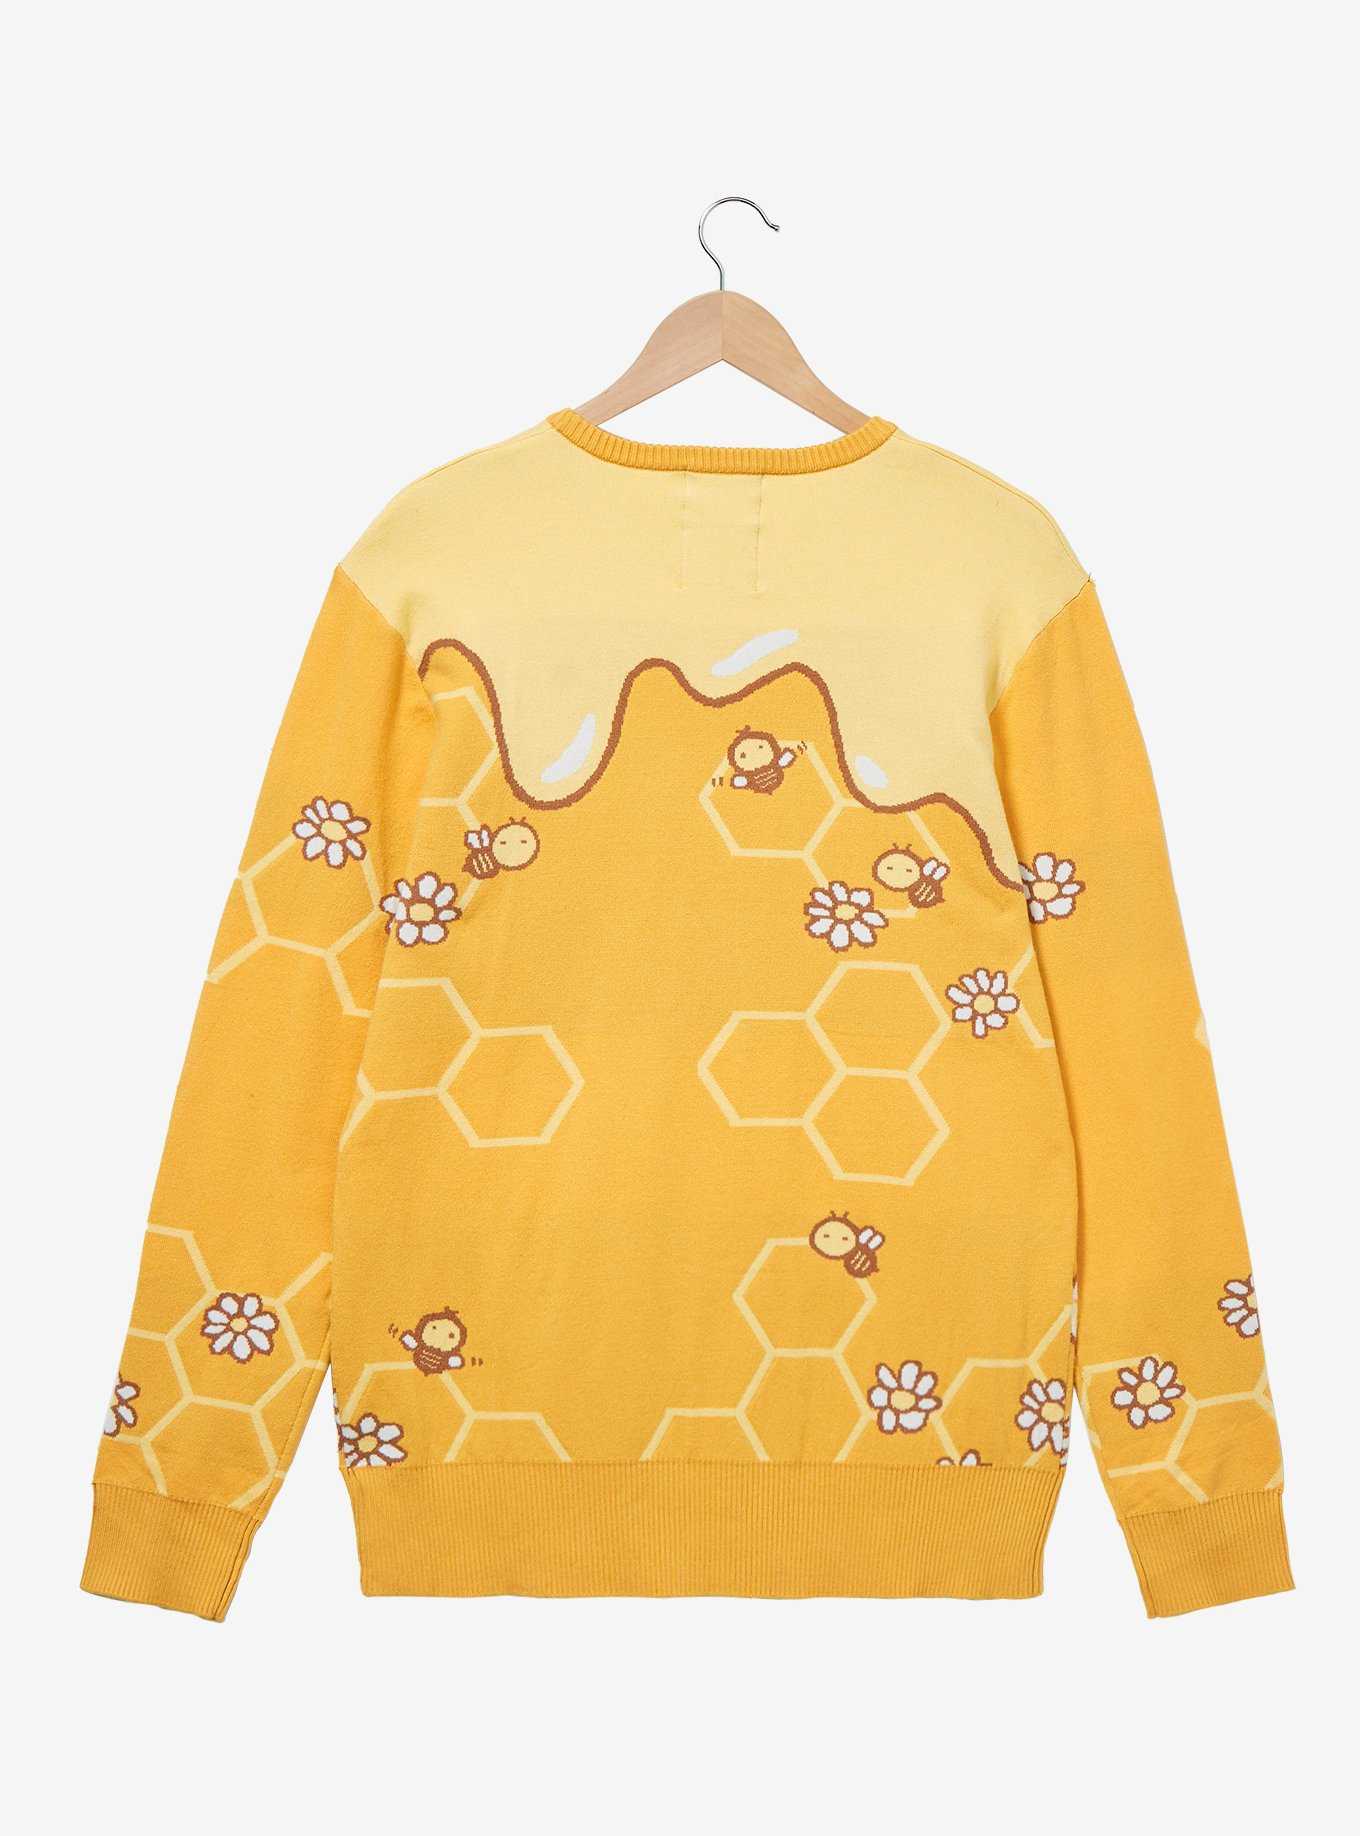 Sanrio Pompompurin Bee Costume Portrait Sweater - BoxLunch Exclusive, , hi-res